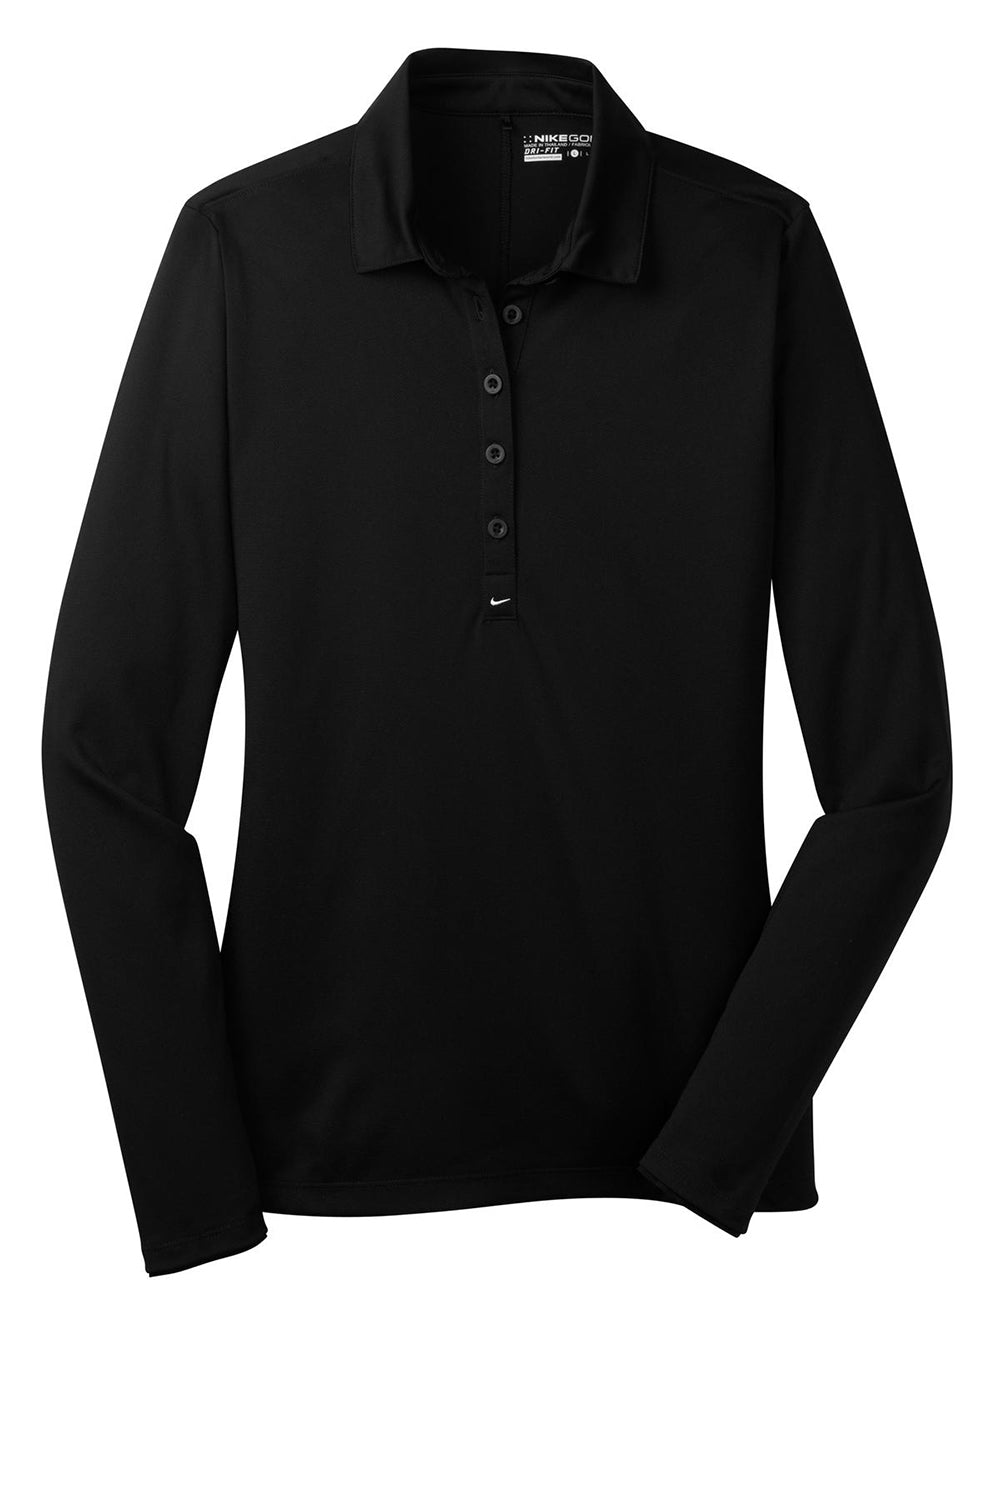 Nike 545322 Womens Stretch Tech Dri-Fit Moisture Wicking Long Sleeve Polo Shirt Black Flat Front